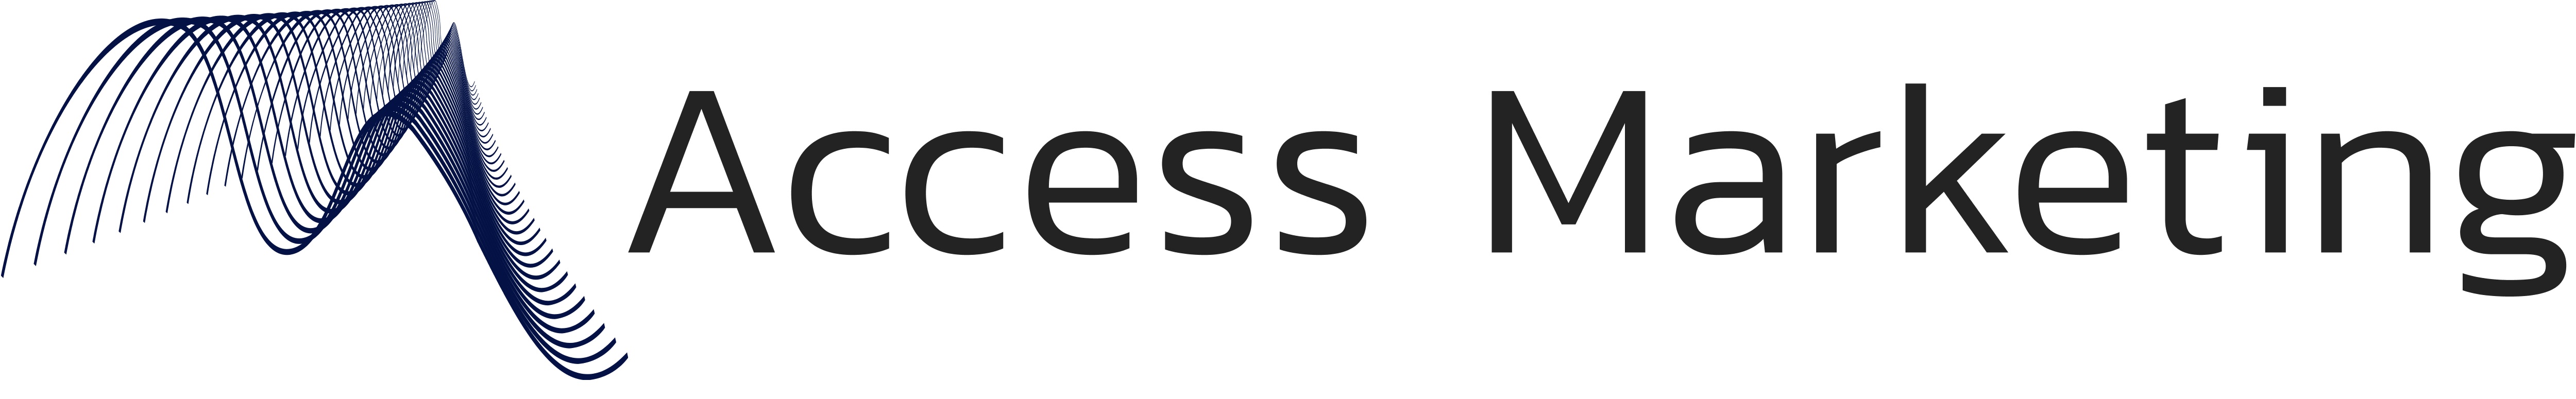 Access Marketing - Logo - JPEG